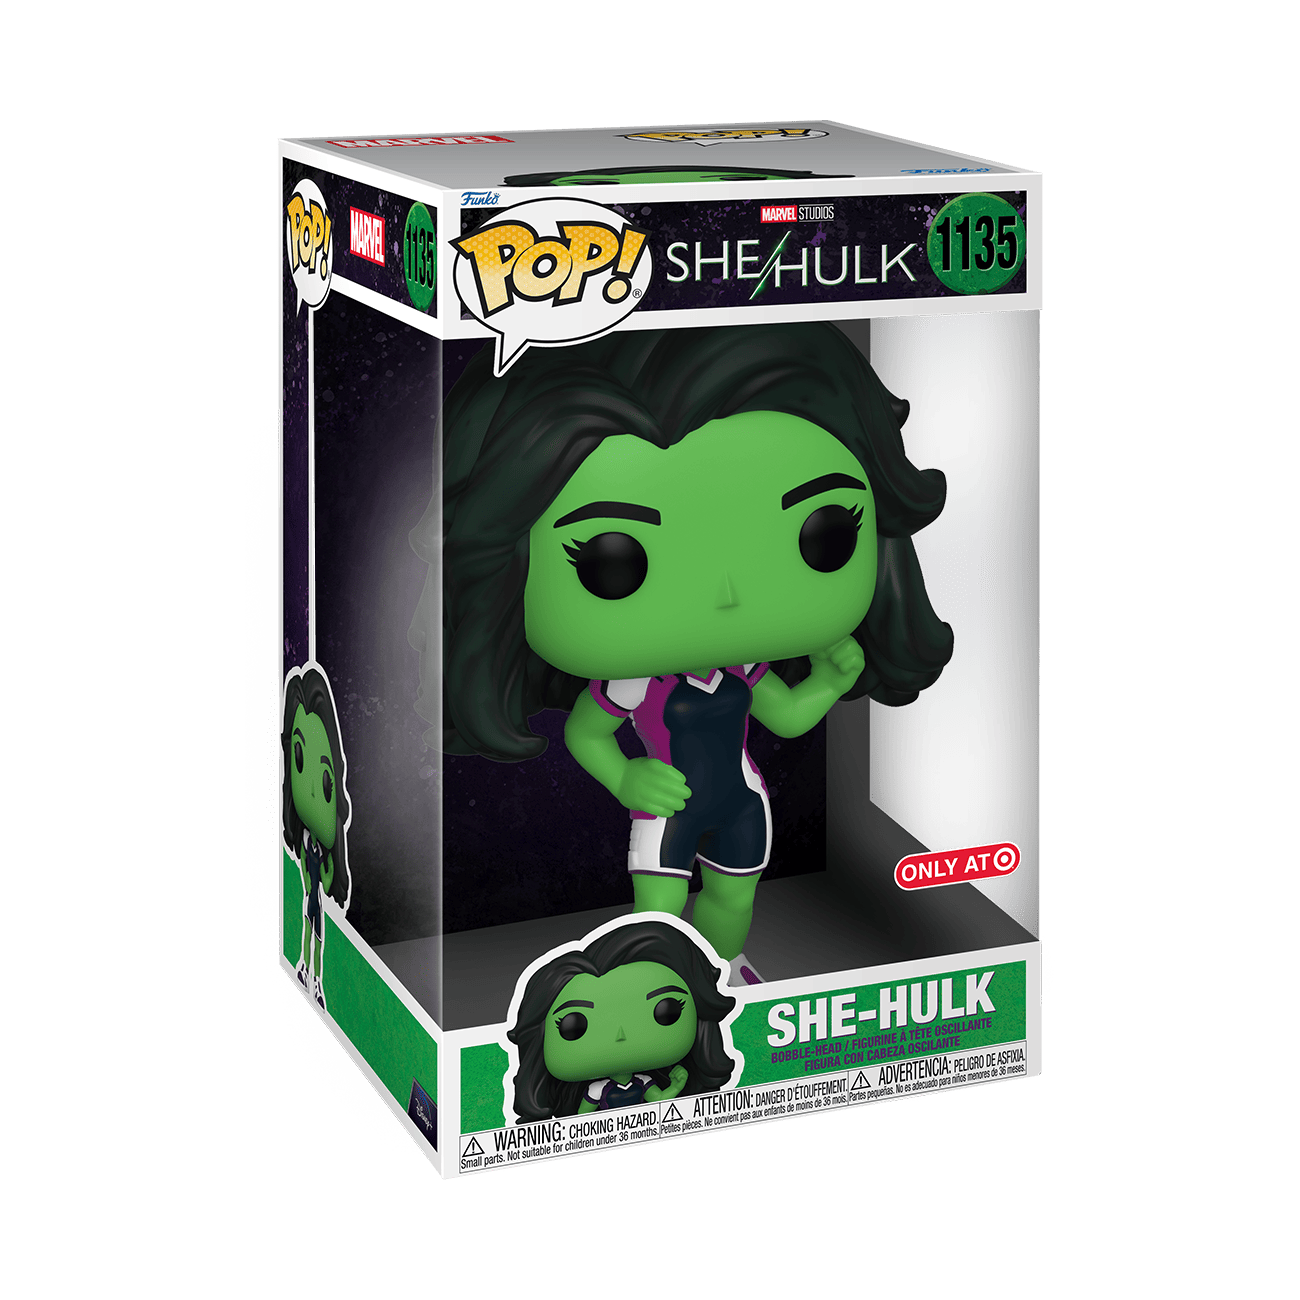 Buy Pop! Jumbo She-Hulk at Funko.